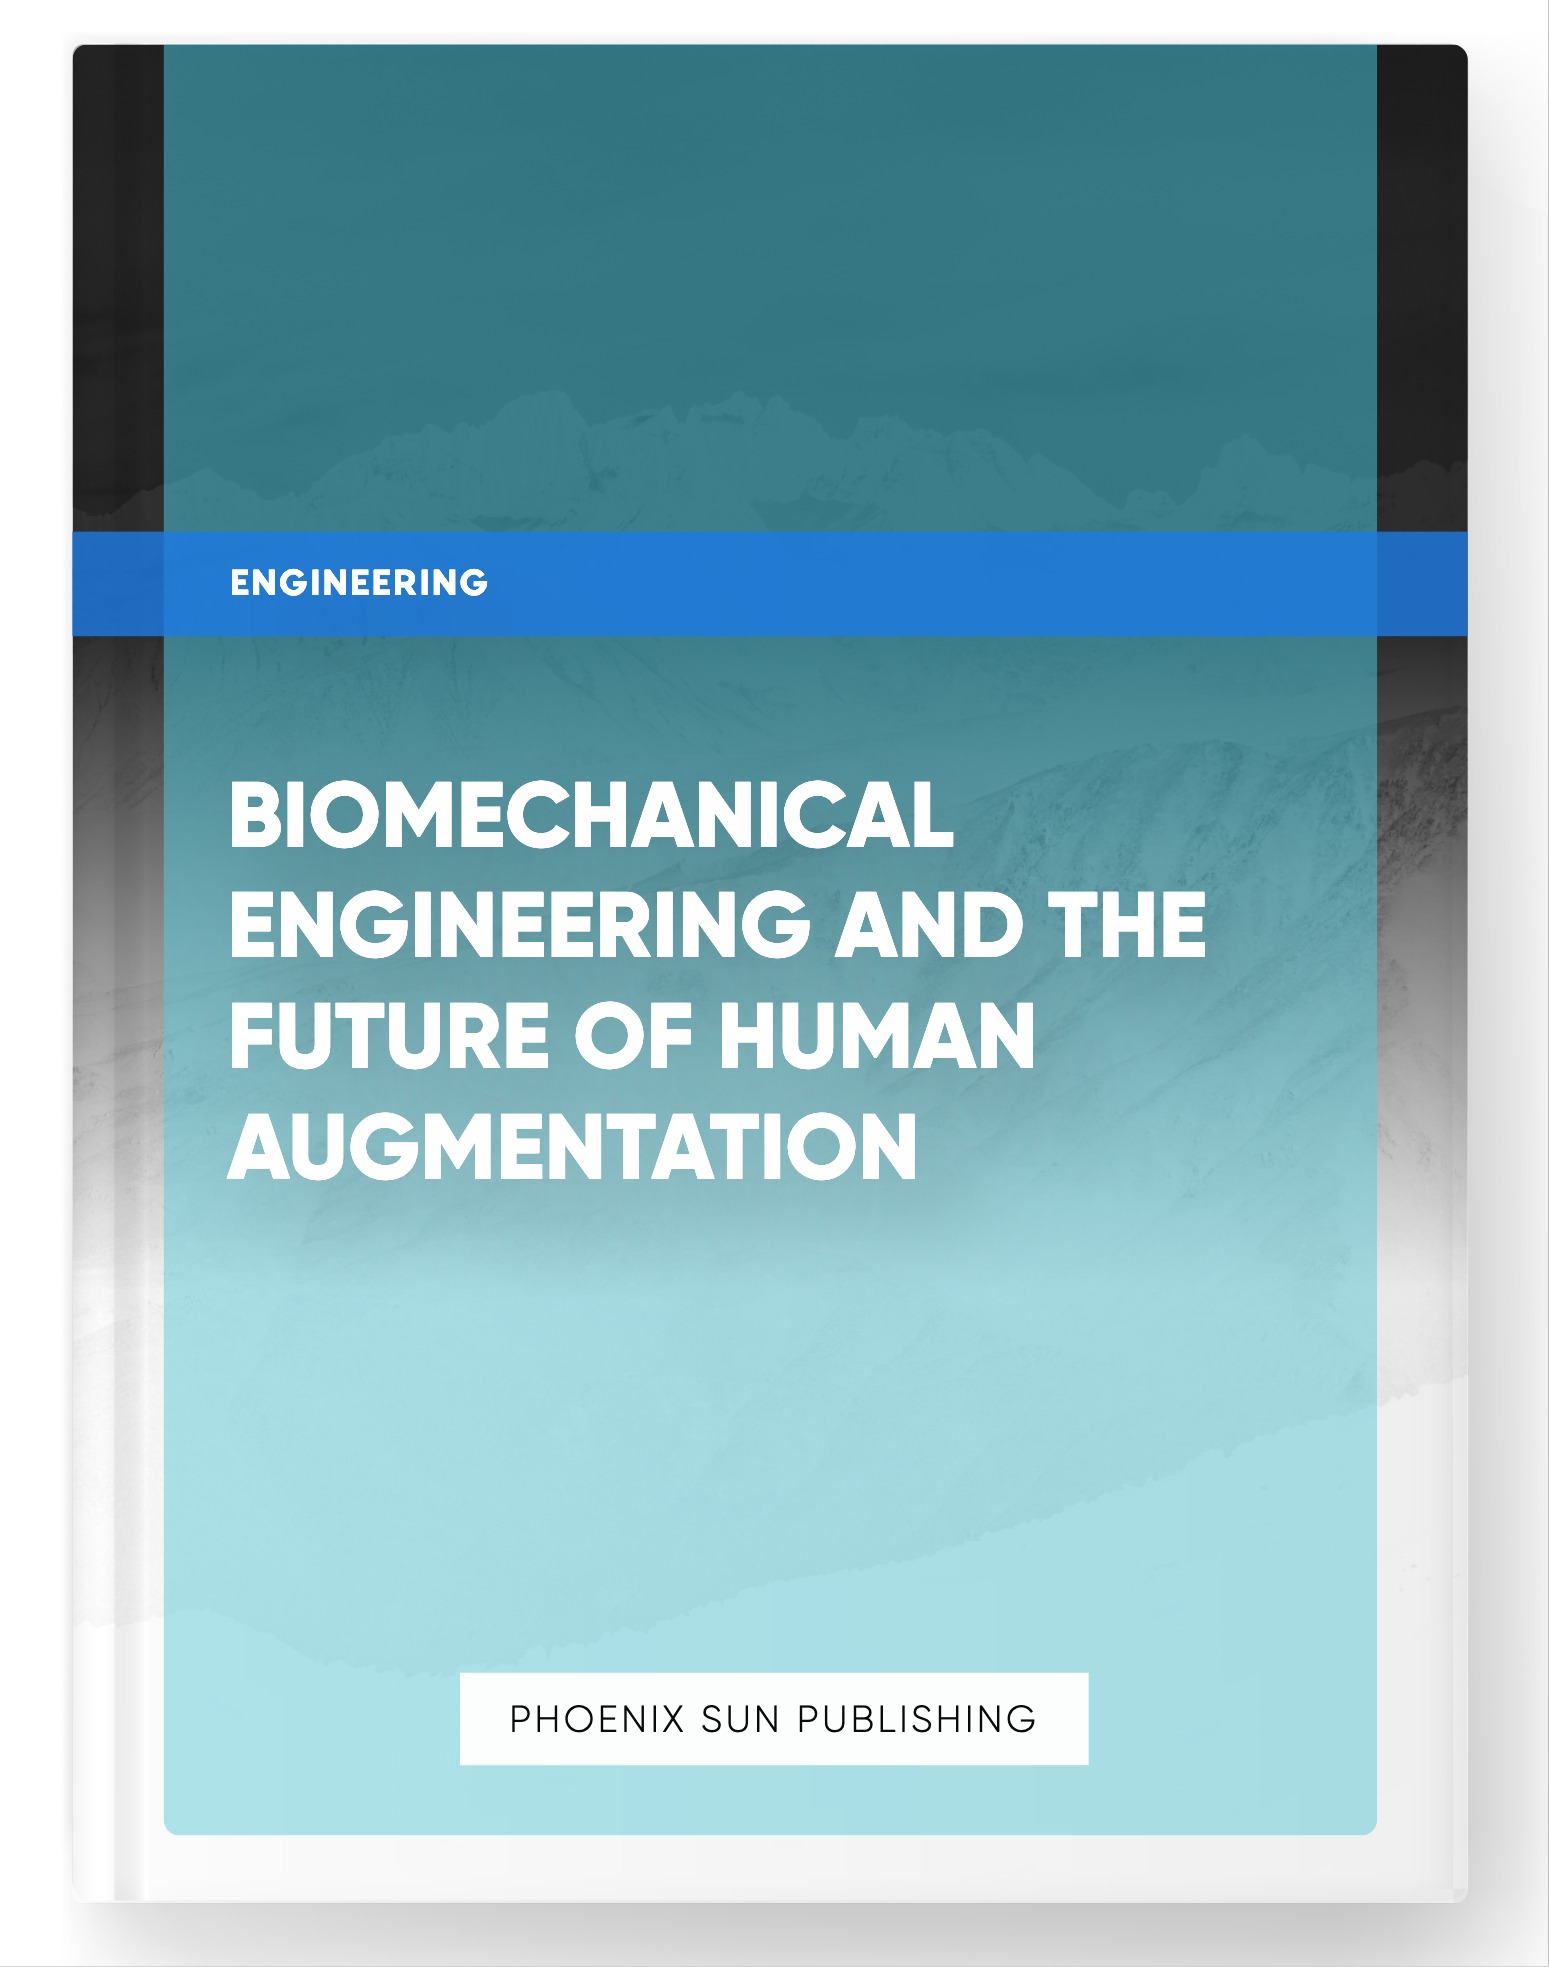 Biomechanical Engineering and the Future of Human Augmentation